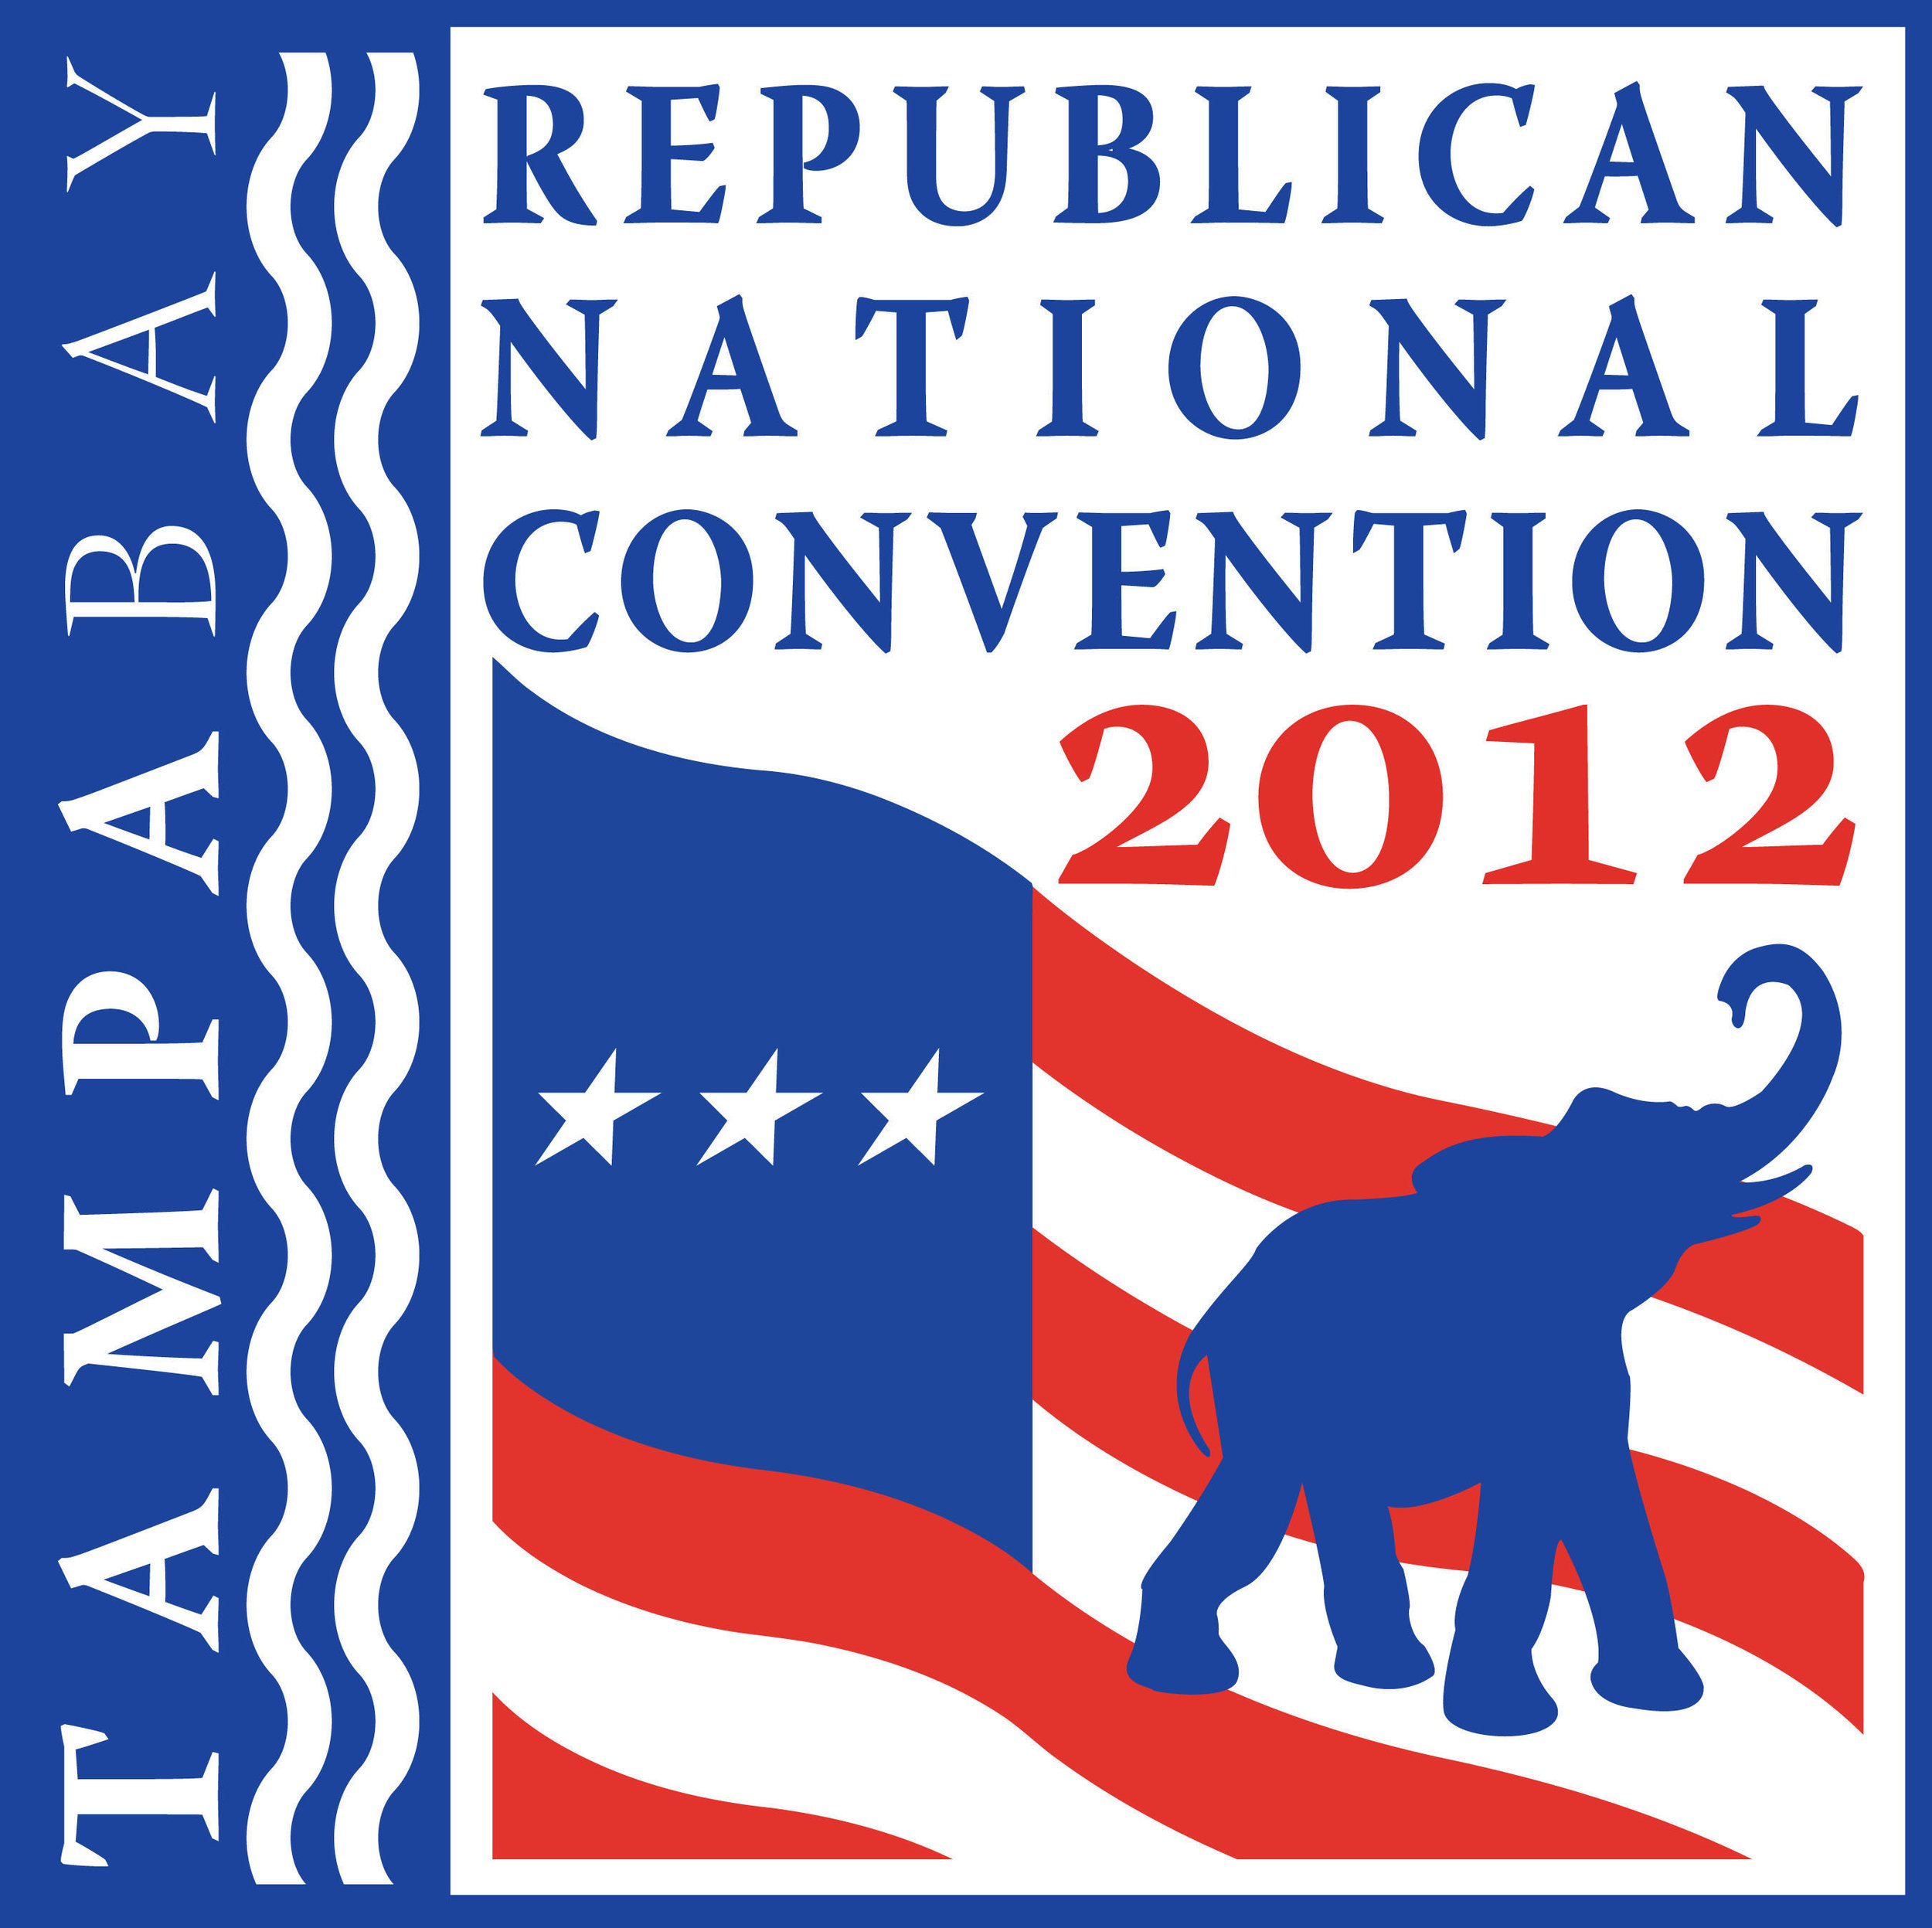 Republican National Convention 2012.jpg